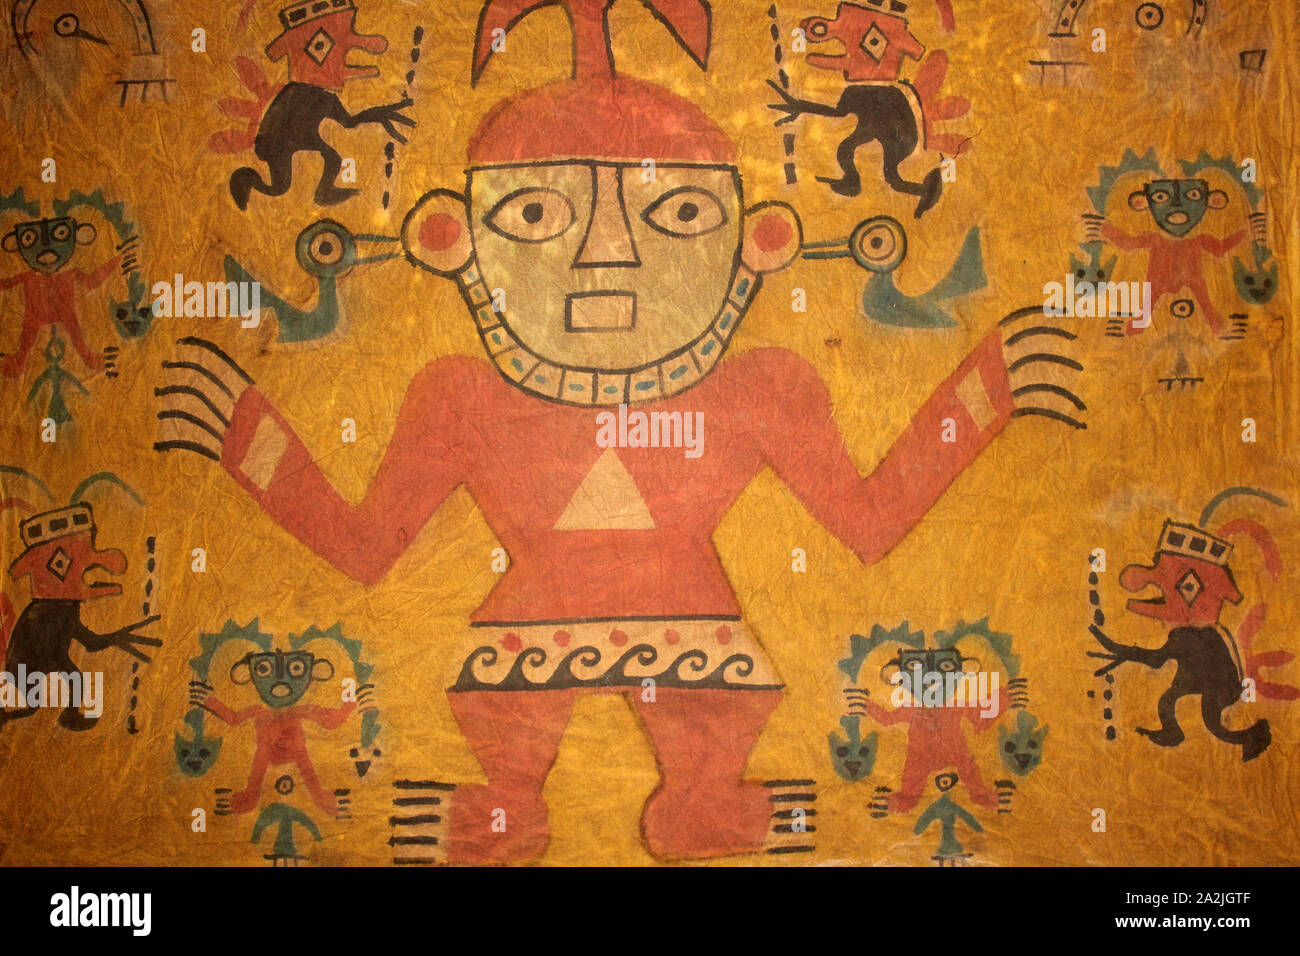 Viracocha and the Legendary Origins of the Inca